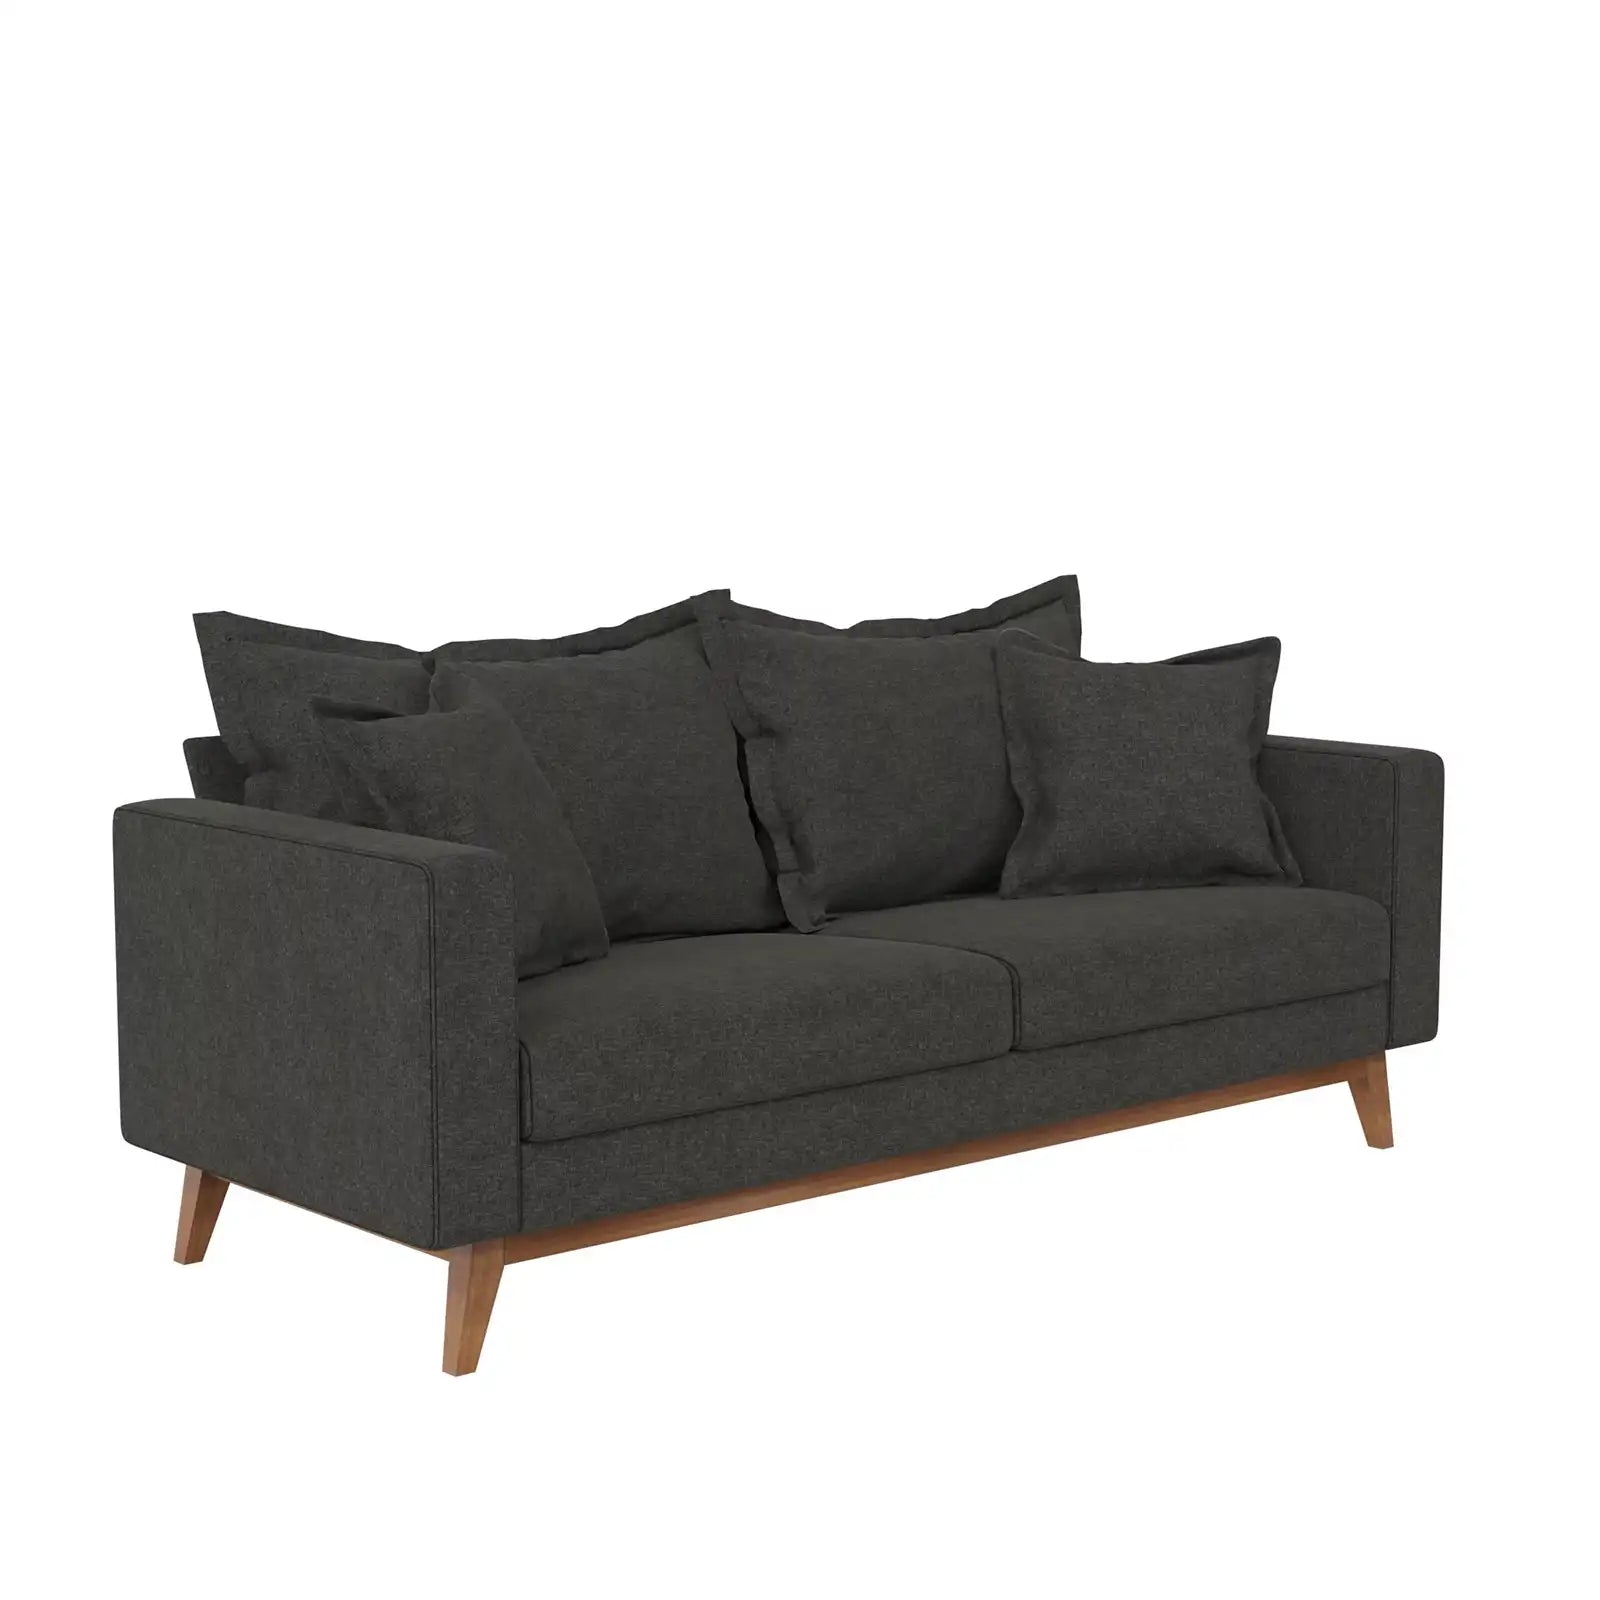 Comfortable Pillowback Wood Stretcher Sofa